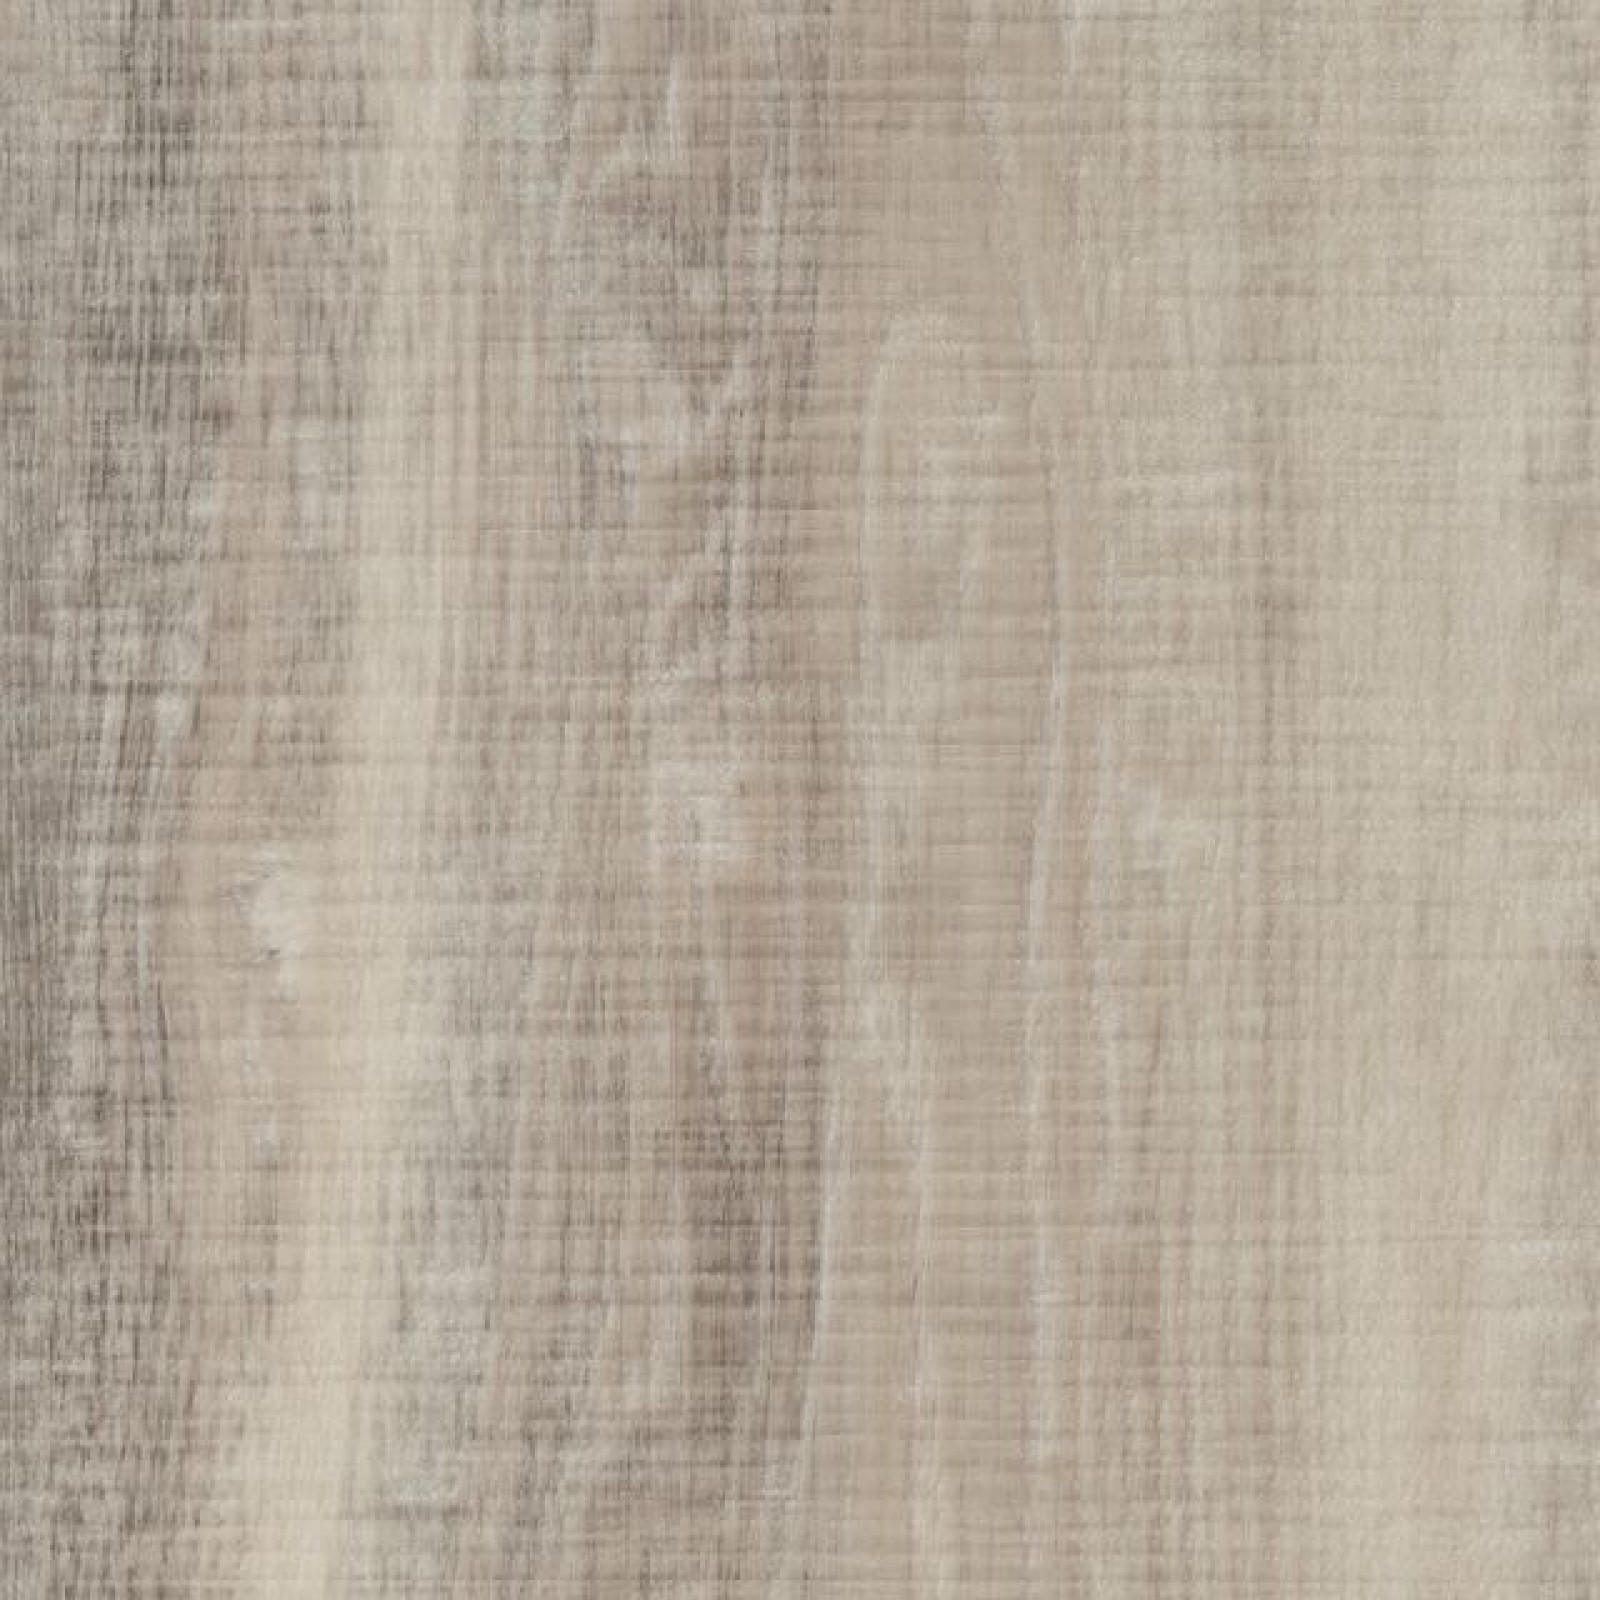 Vzor - 60151FL white raw timber